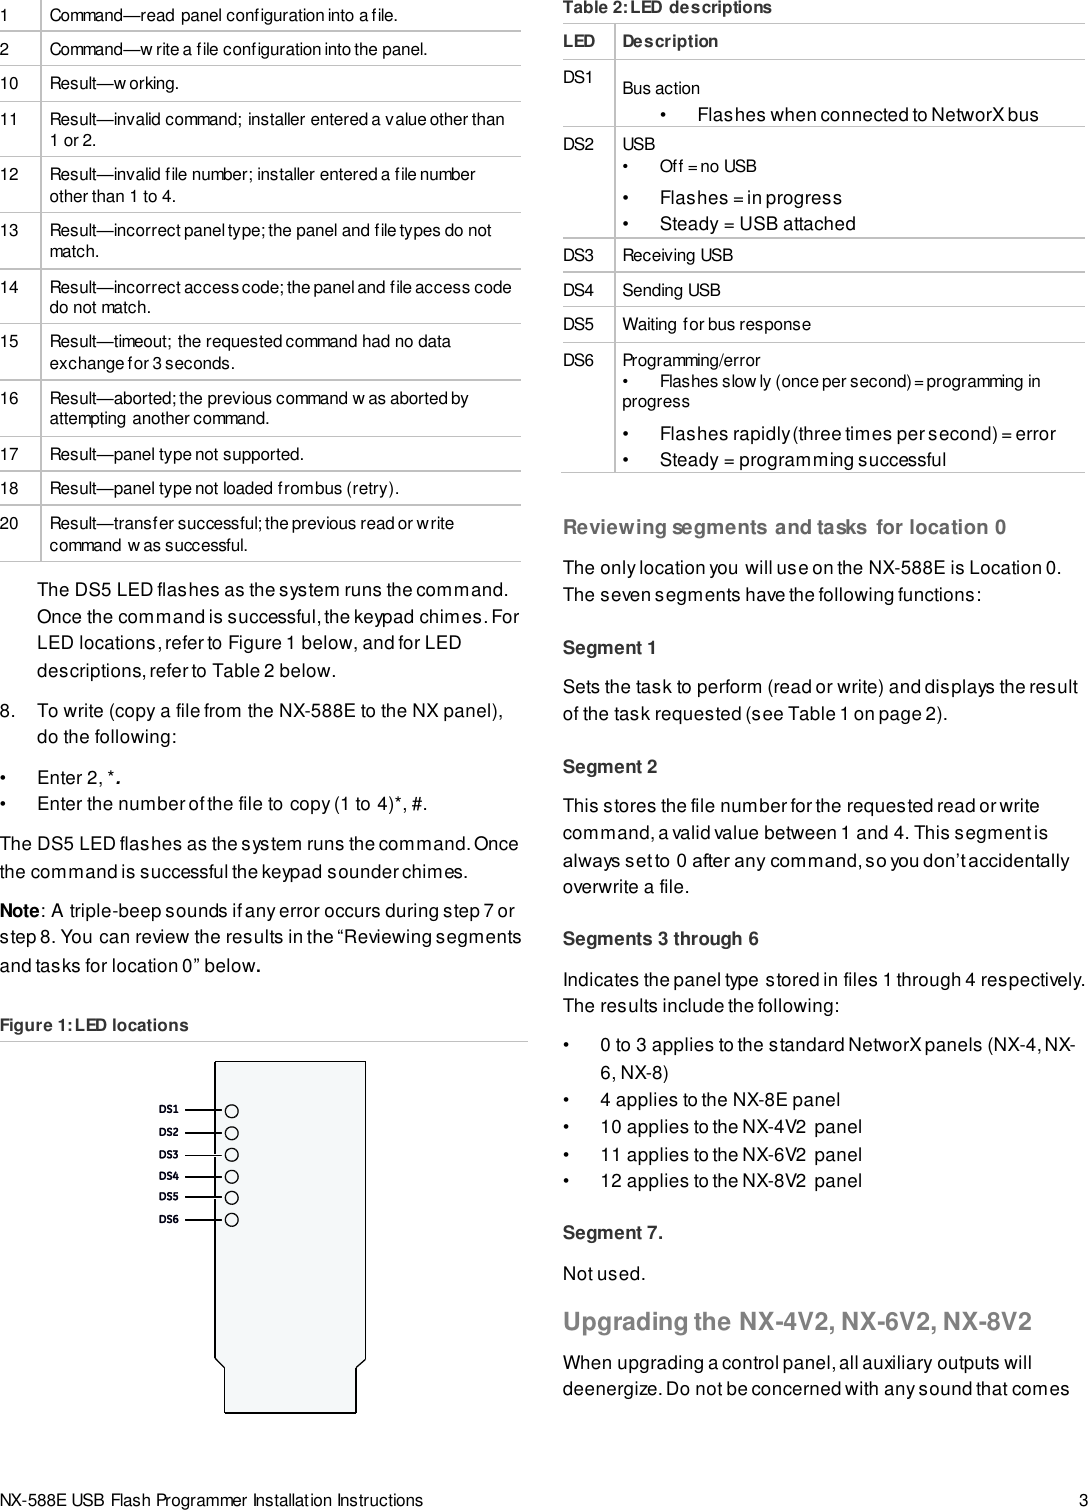 Page 3 of 5 - NX-588E USB Flash Programmer Installation Instructions  466-2257 REV C